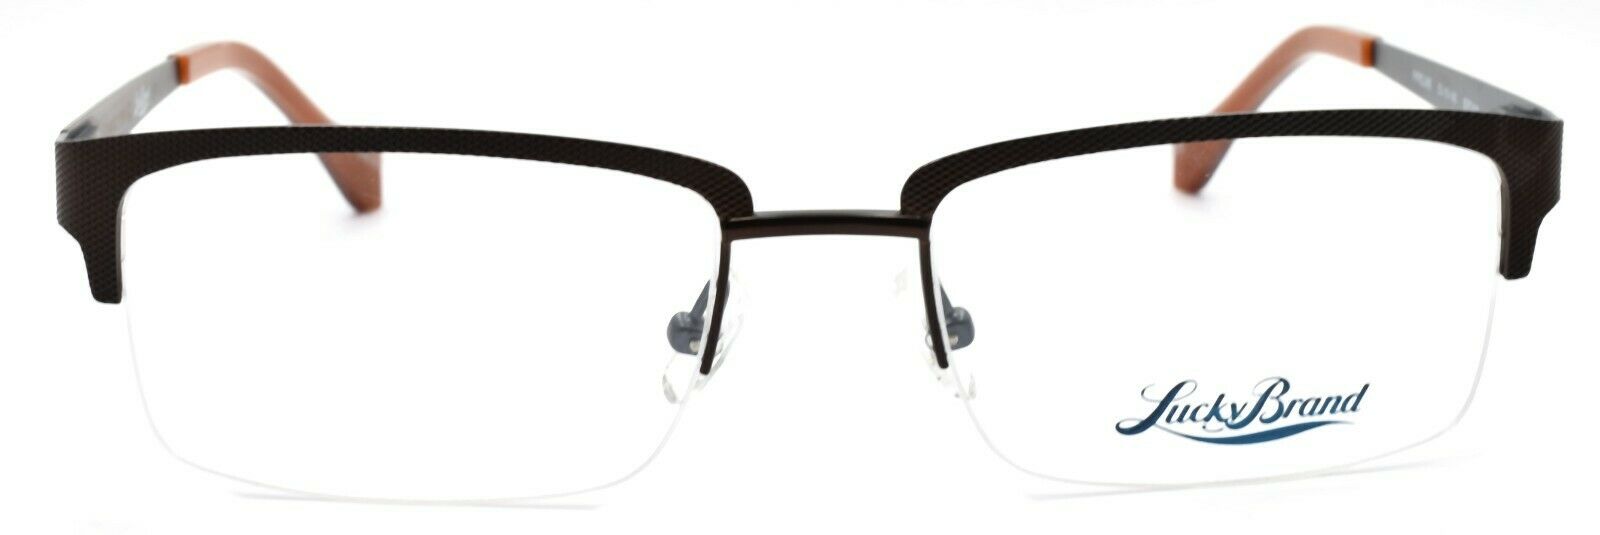 2-LUCKY BRAND Pipeline Men's Eyeglasses Frames Half-rim 53-18-140 Brown + CASE-751286256321-IKSpecs